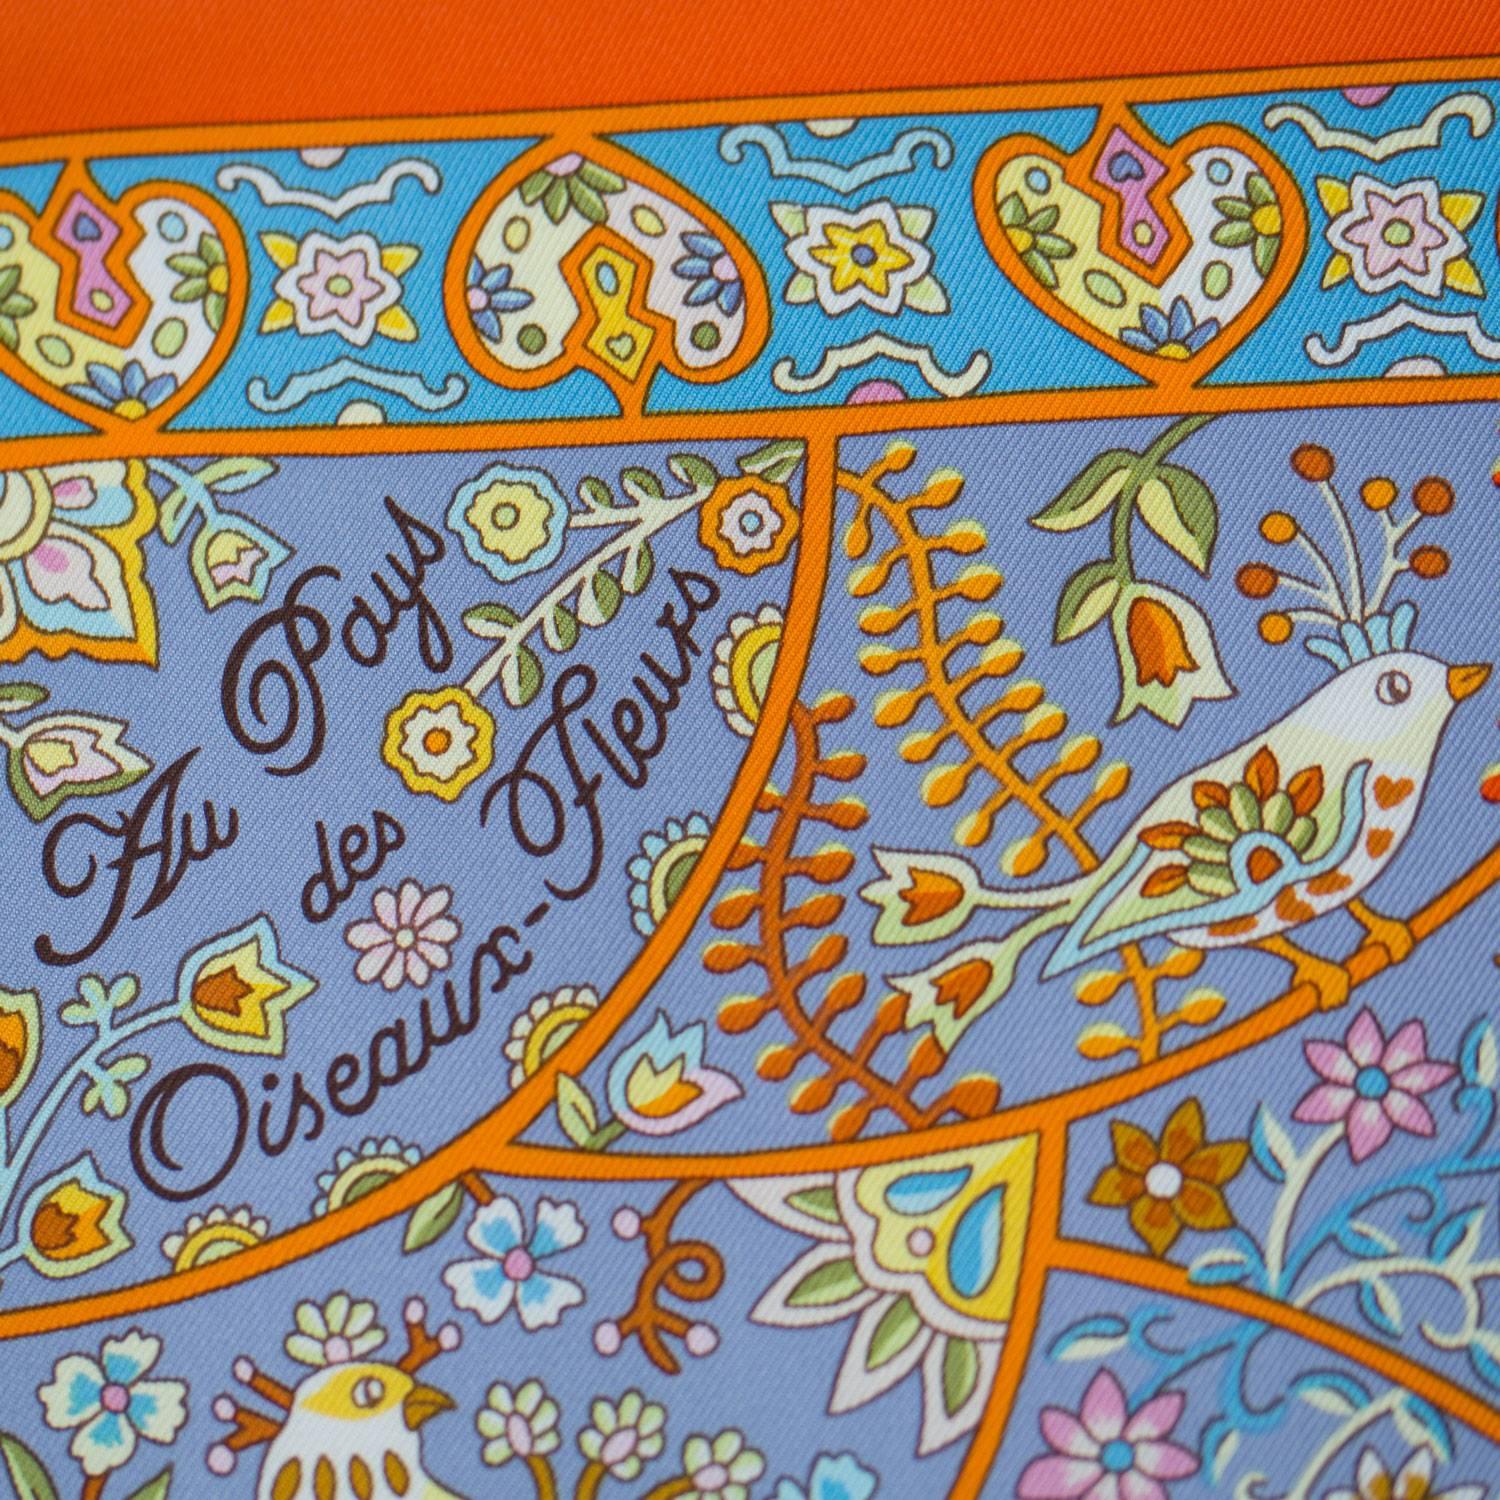 Hermes  Carre Twill 100% Silk Au Pays des Oiseaux Fleurs Orange/Bleu/Vert 2016

Bought it in hermès store in 2016.

Pre-owned and never used

Composition:100% Silk

Size: 90x90cm

Model: Au Pays des Oiseaux.

Color: 